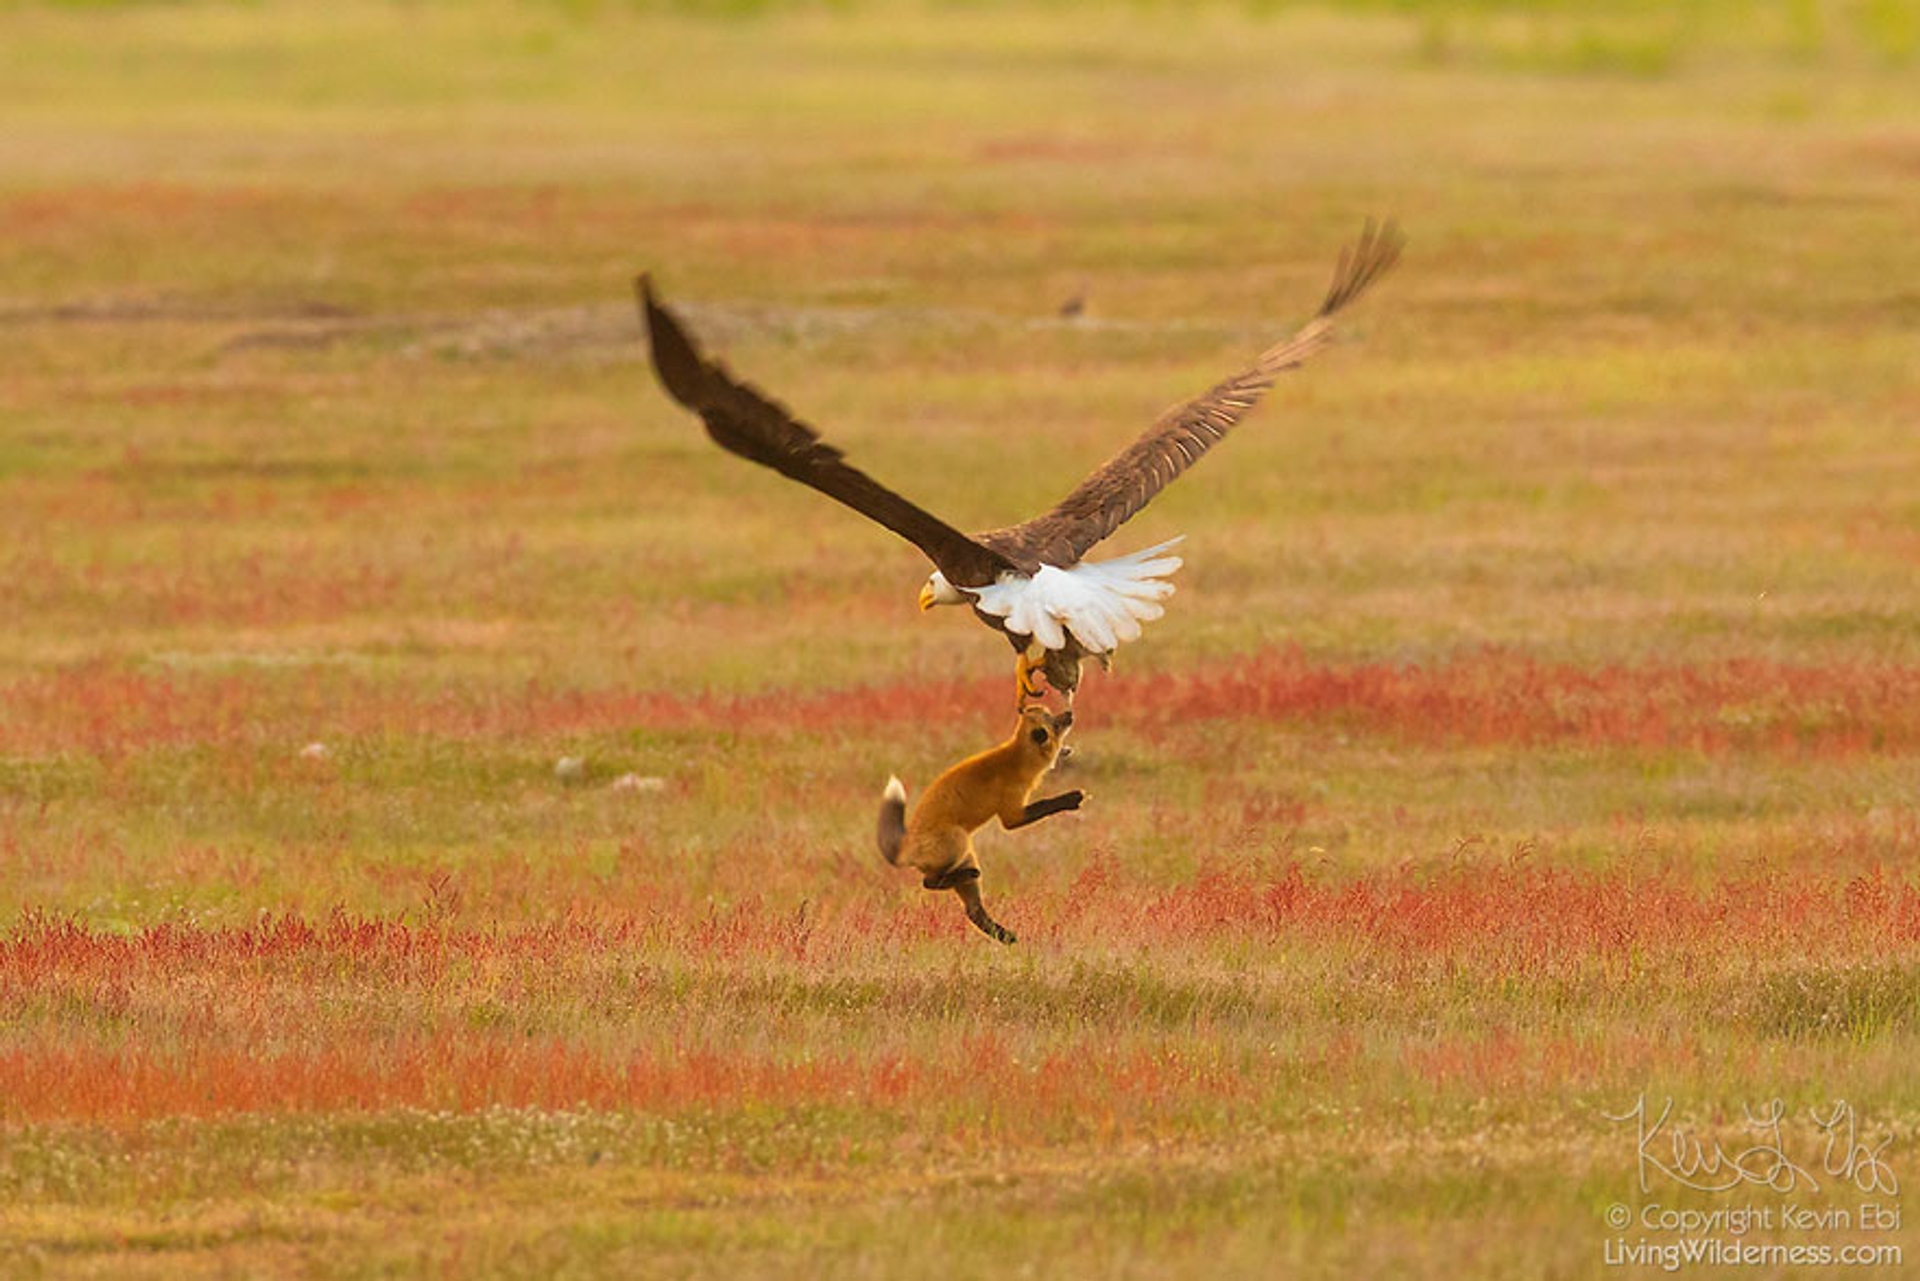 5b07de924d029-wildlife-photography-eagle-fox-fighting-over-rabbit-kevin-ebi-2-5b0661e5b1a11__880